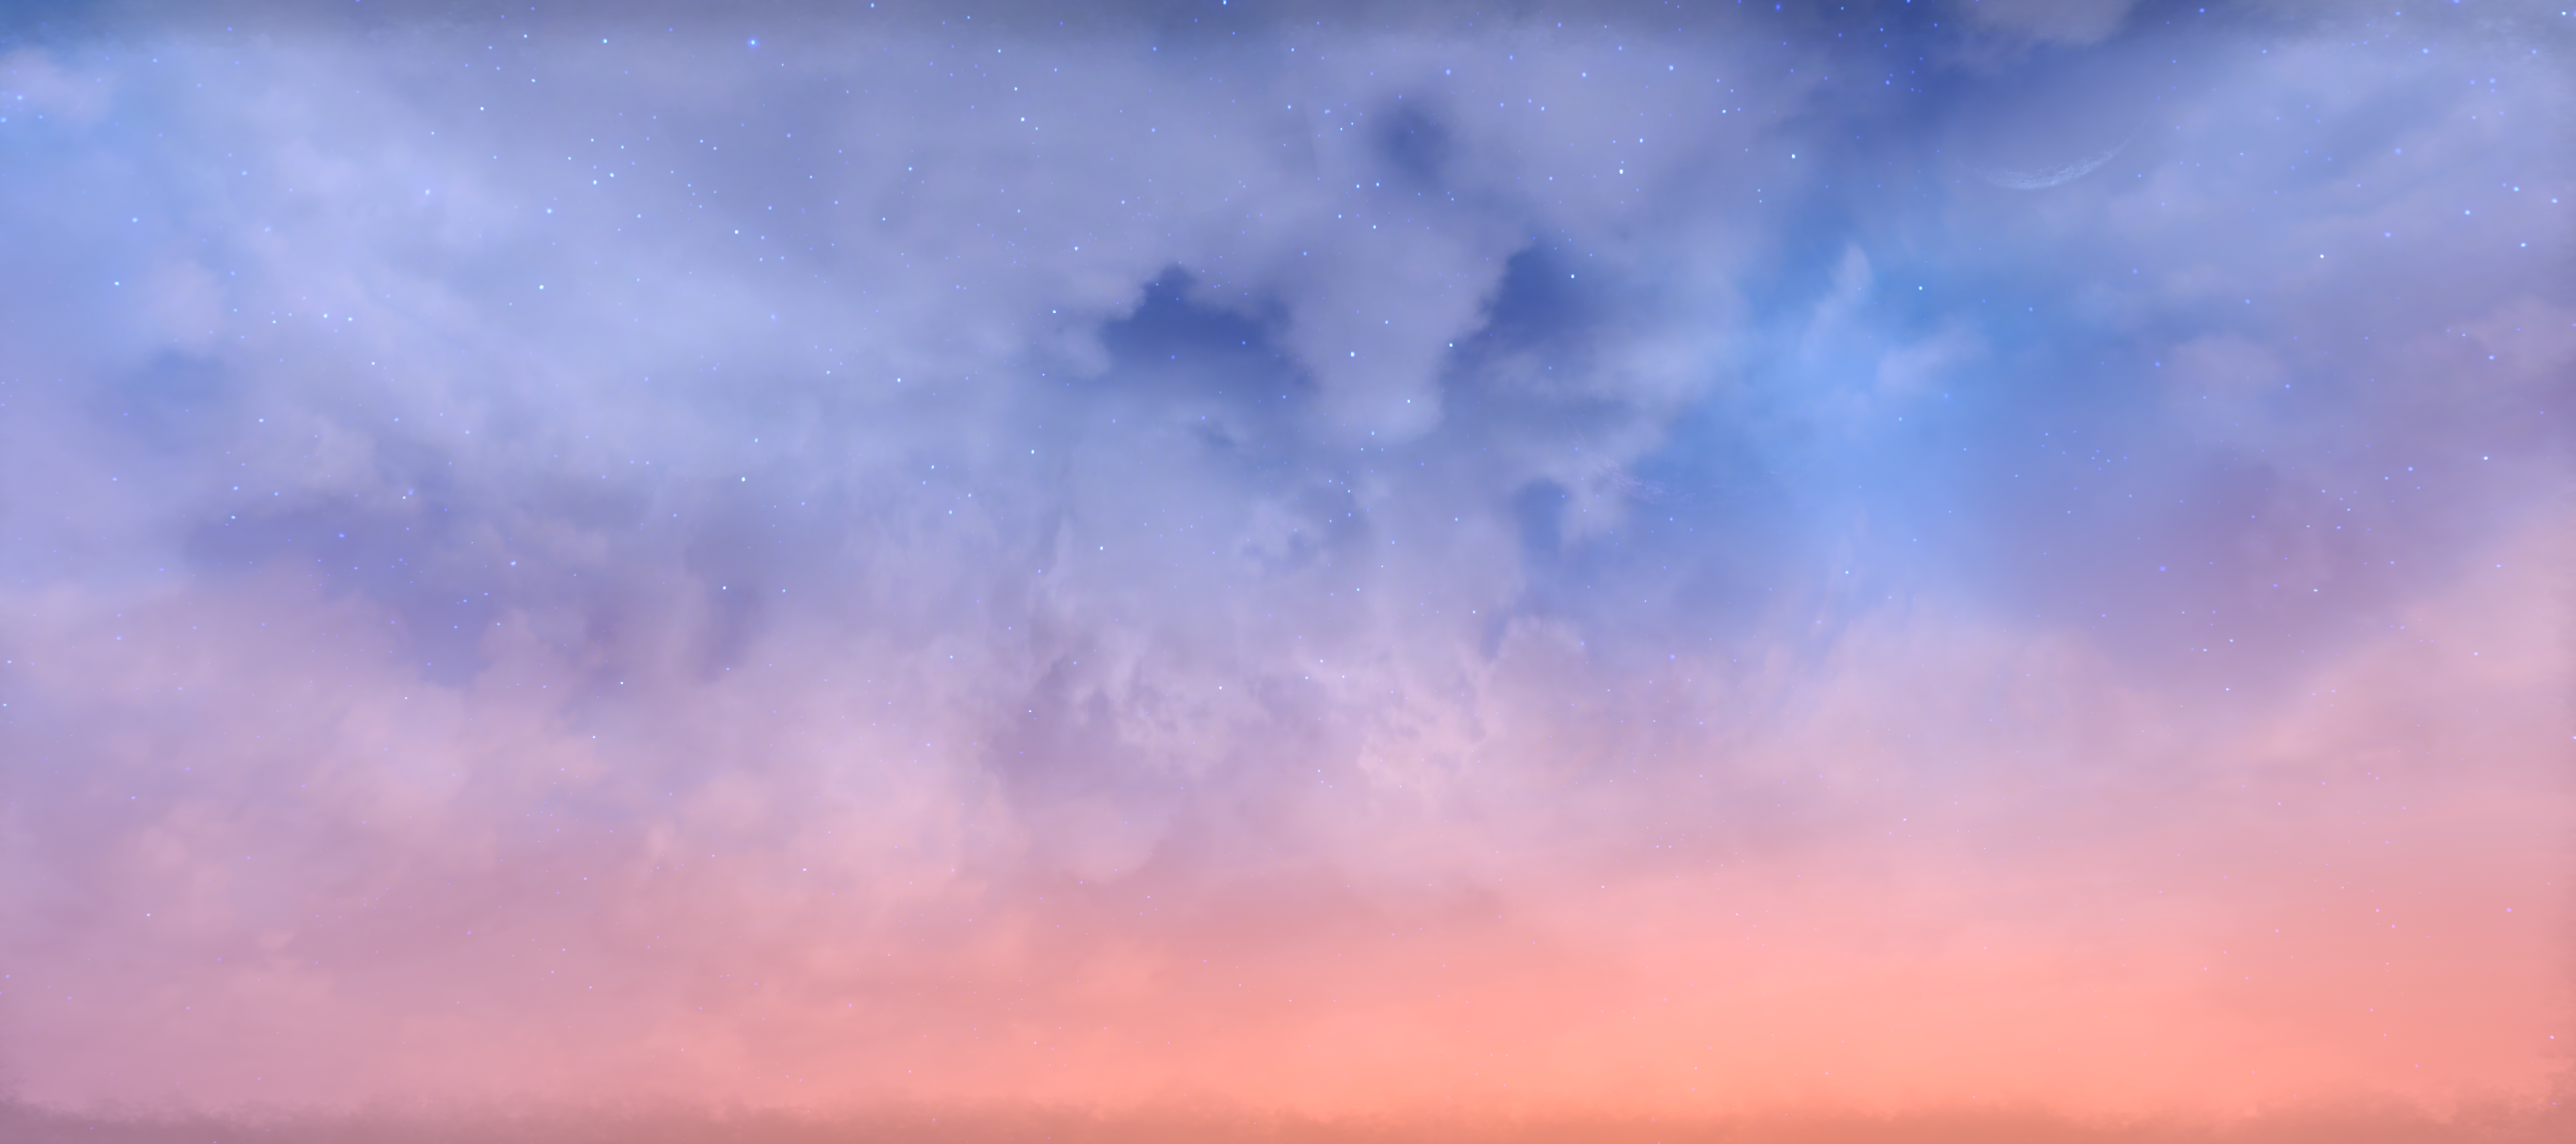 The Elder Scrolls Online Sky Clouds Pink Blue Stars PC Gaming 2593x1152